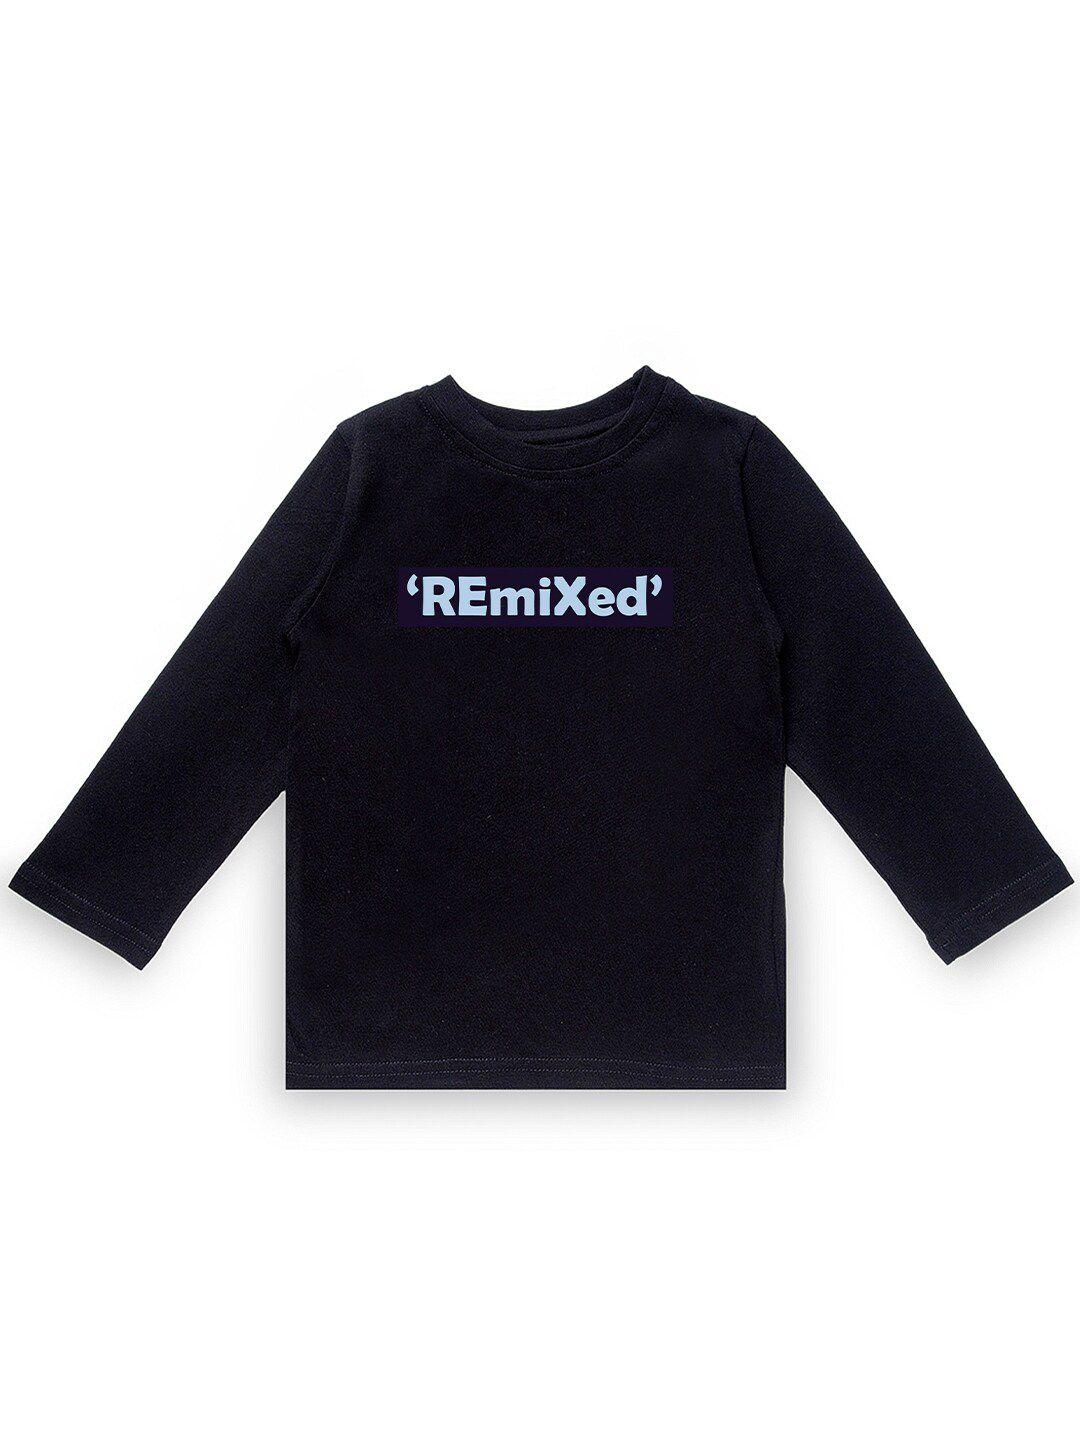 kavee-boys-black-typography-t-shirt